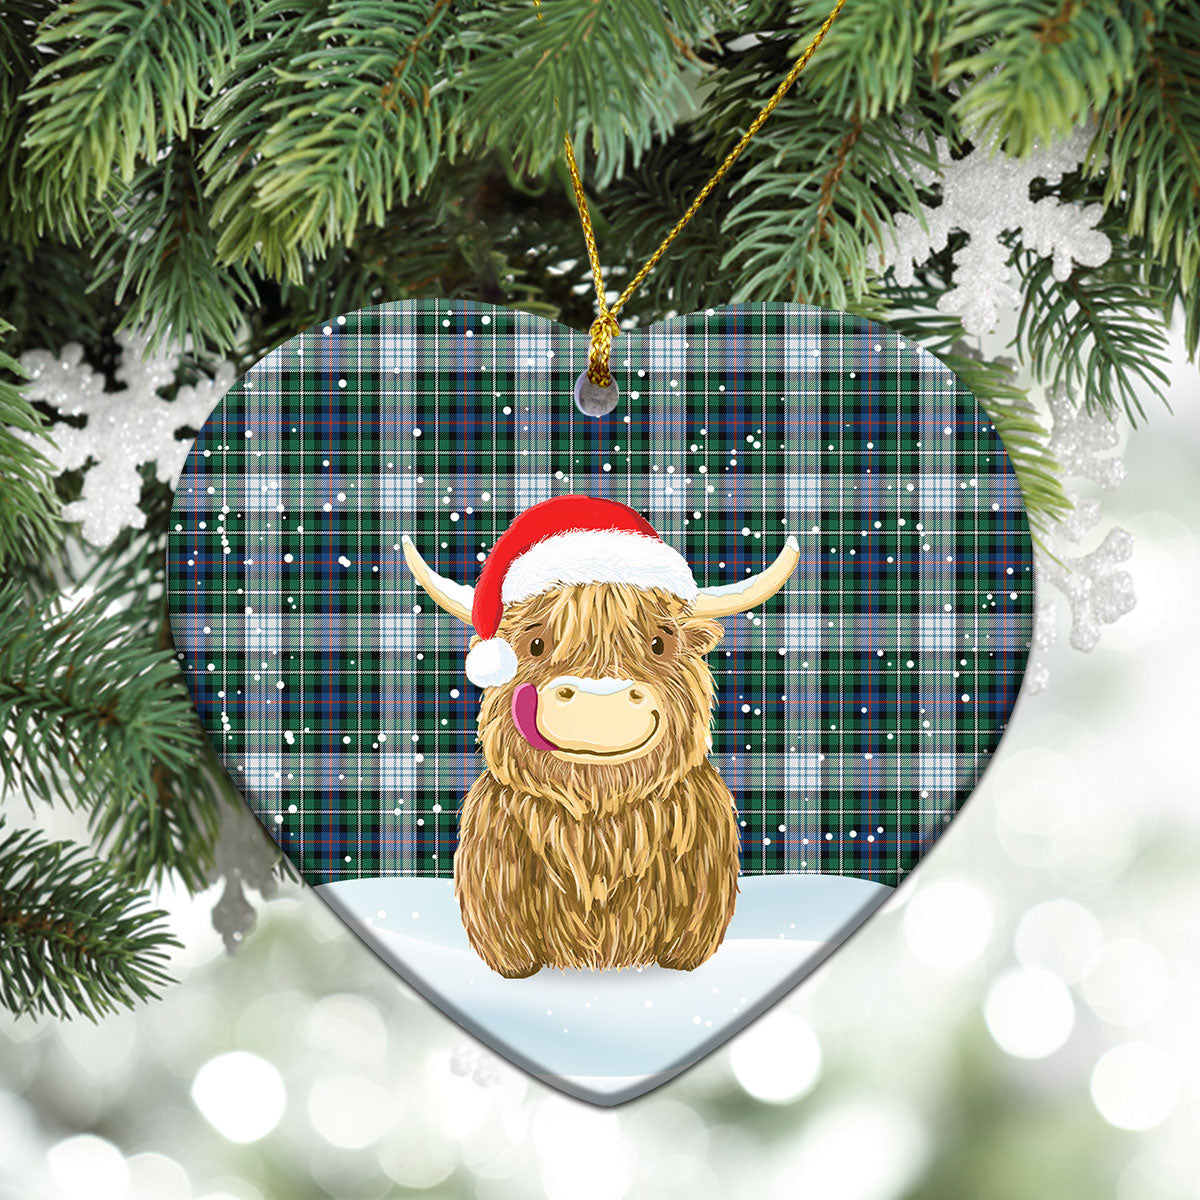 MacKenzie Dress Ancient Tartan Christmas Ceramic Ornament - Highland Cows Style